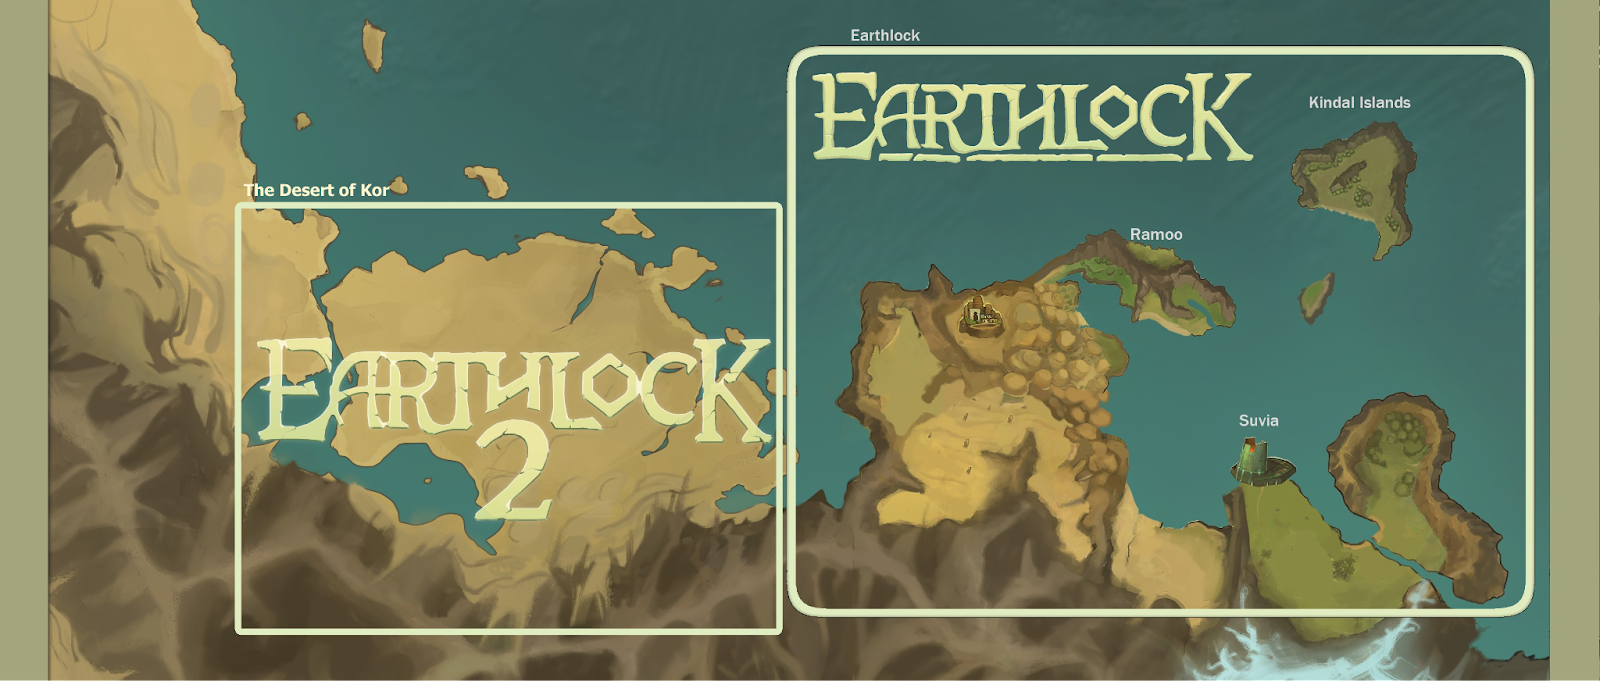 EARTHLOCK 1 and 2 World Map